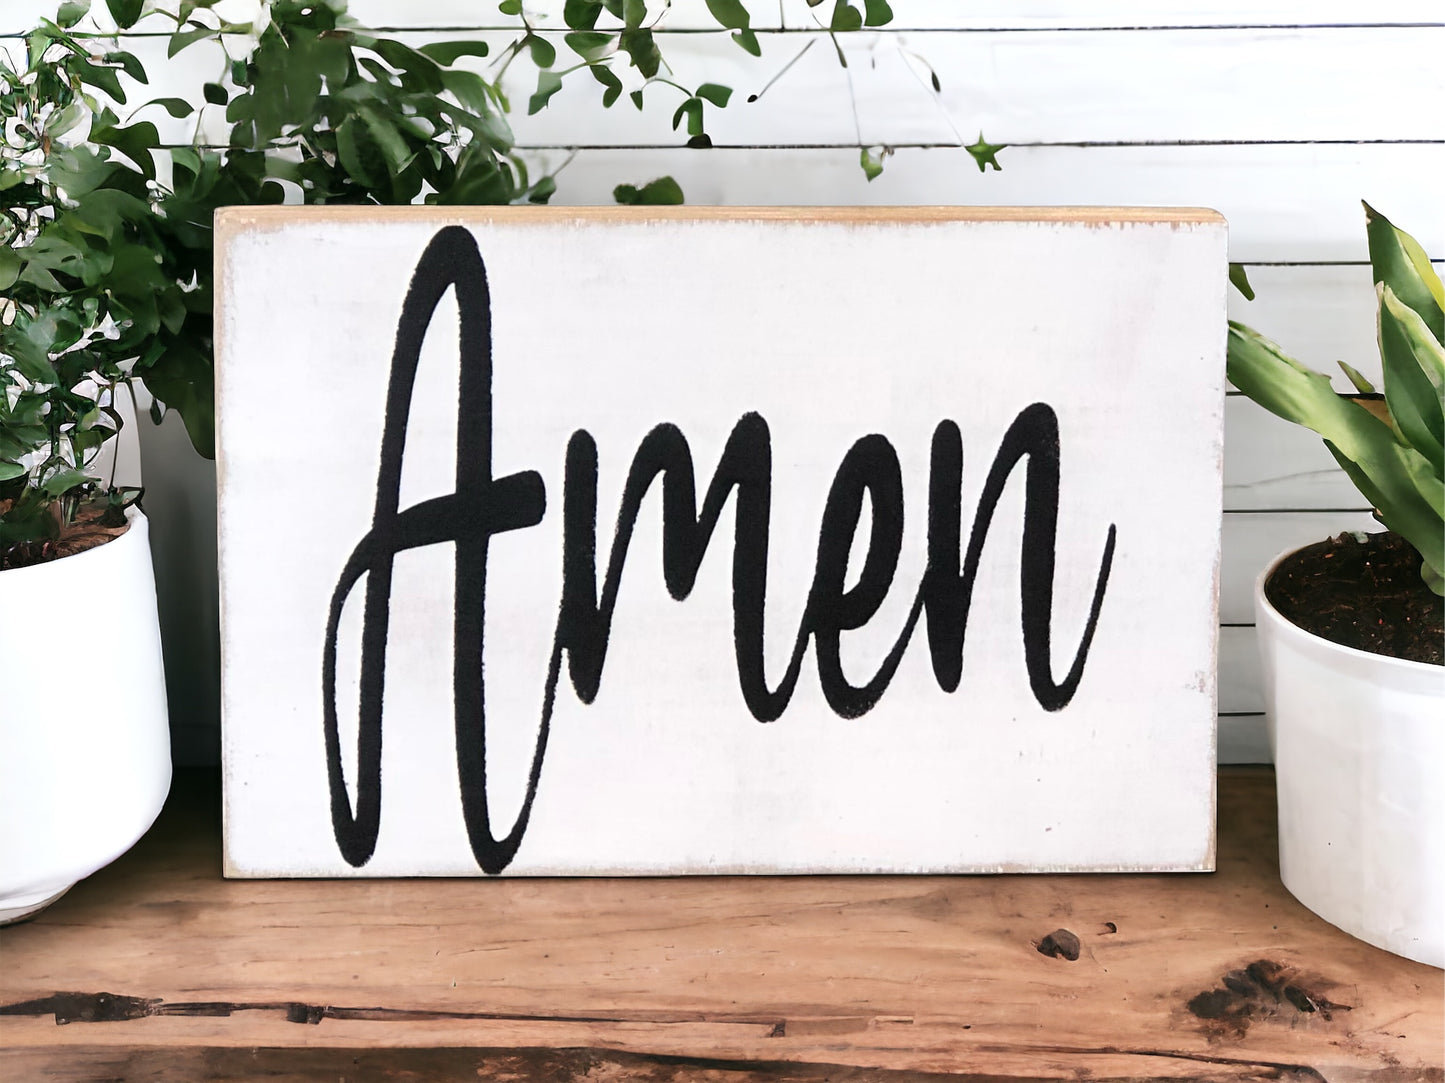 "Amen" wood sign